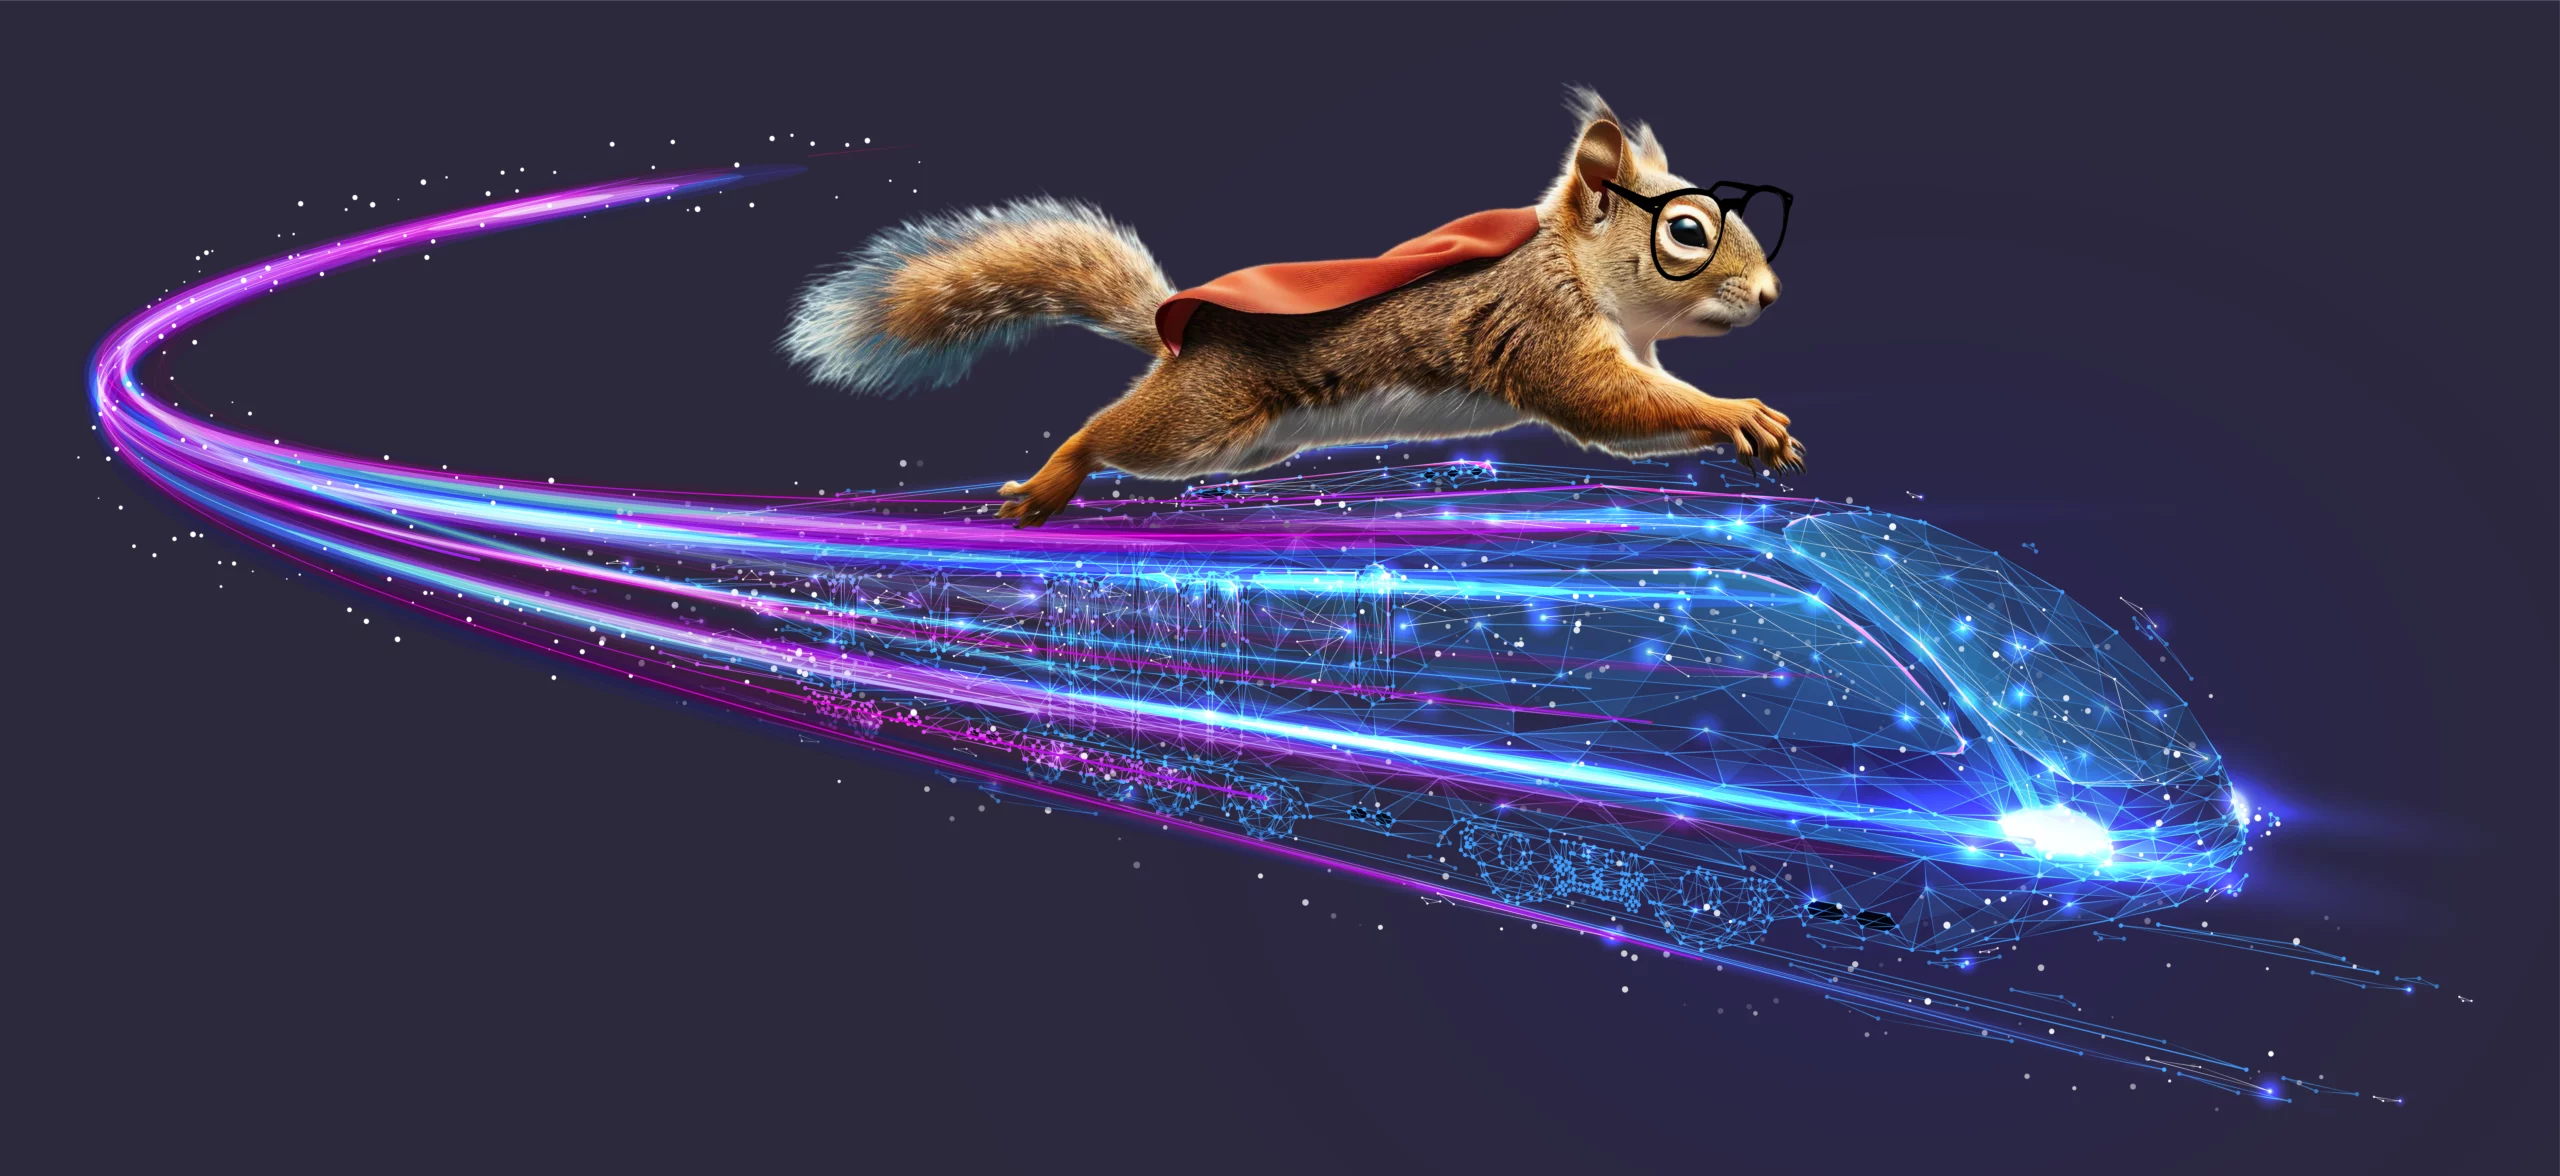 Squirrel riding a fast train.